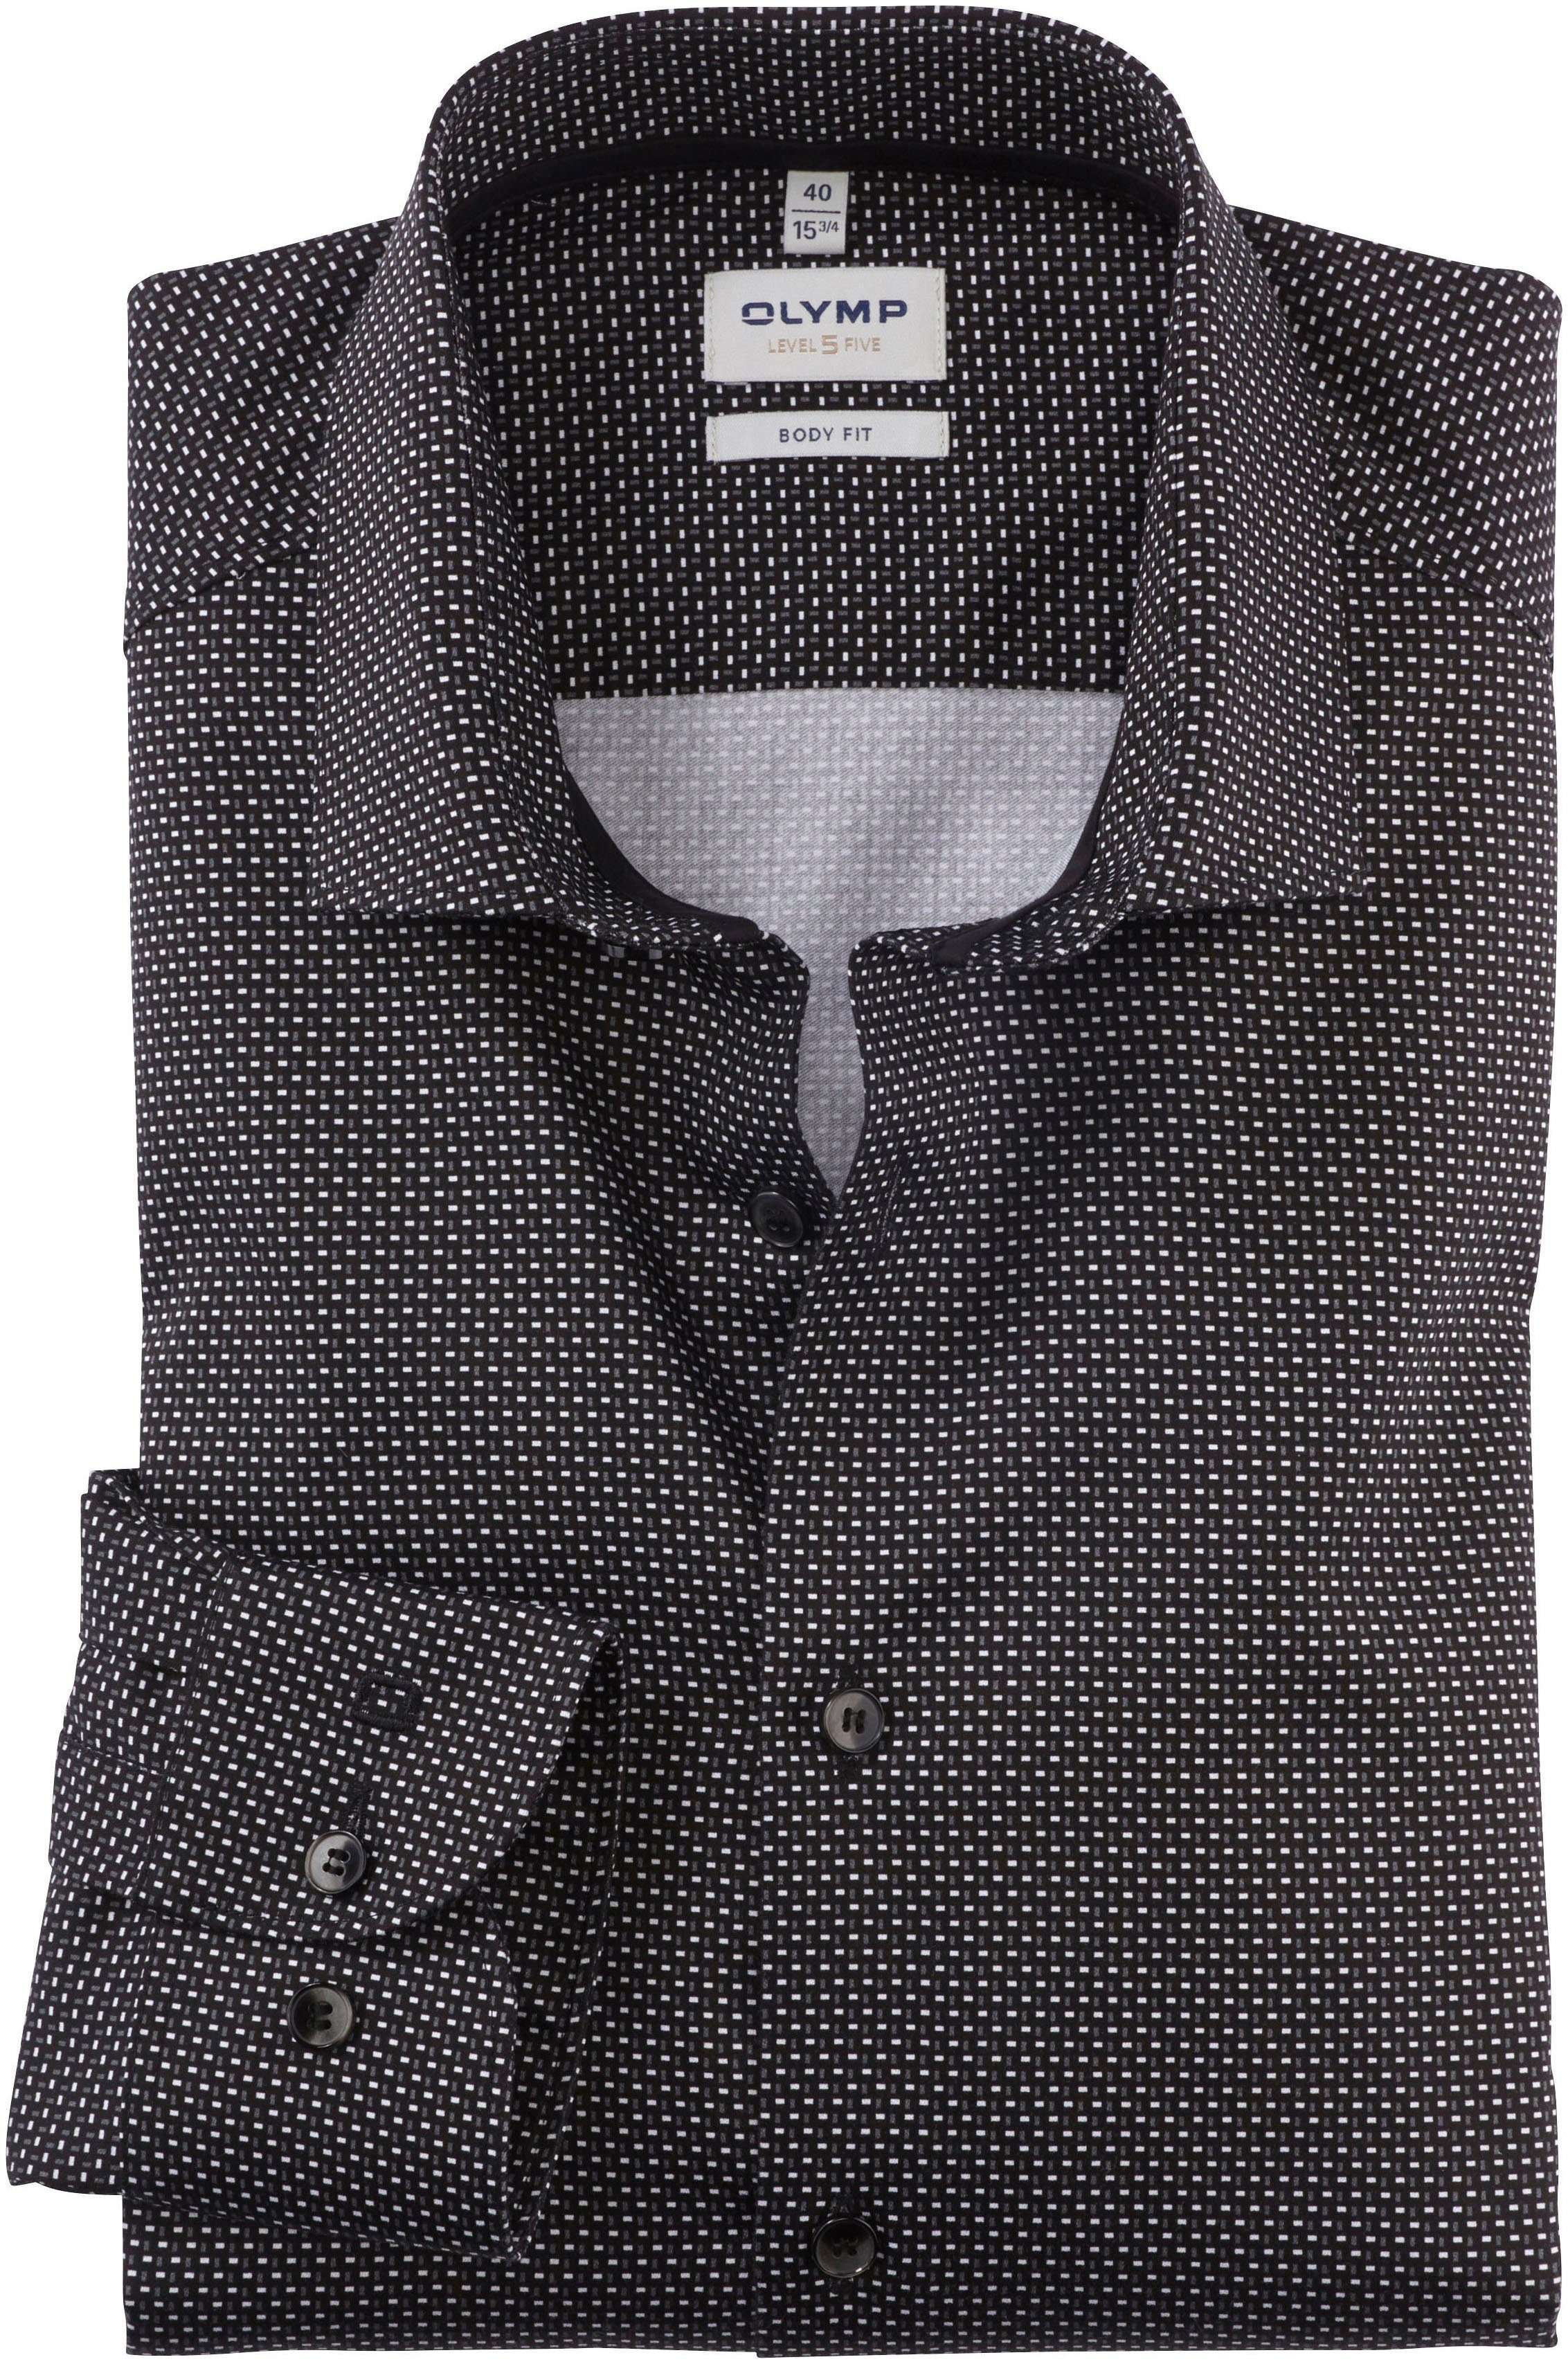 Berühmte Luxusmarke OLYMP Businesshemd Level 5 Five fit schwarz body